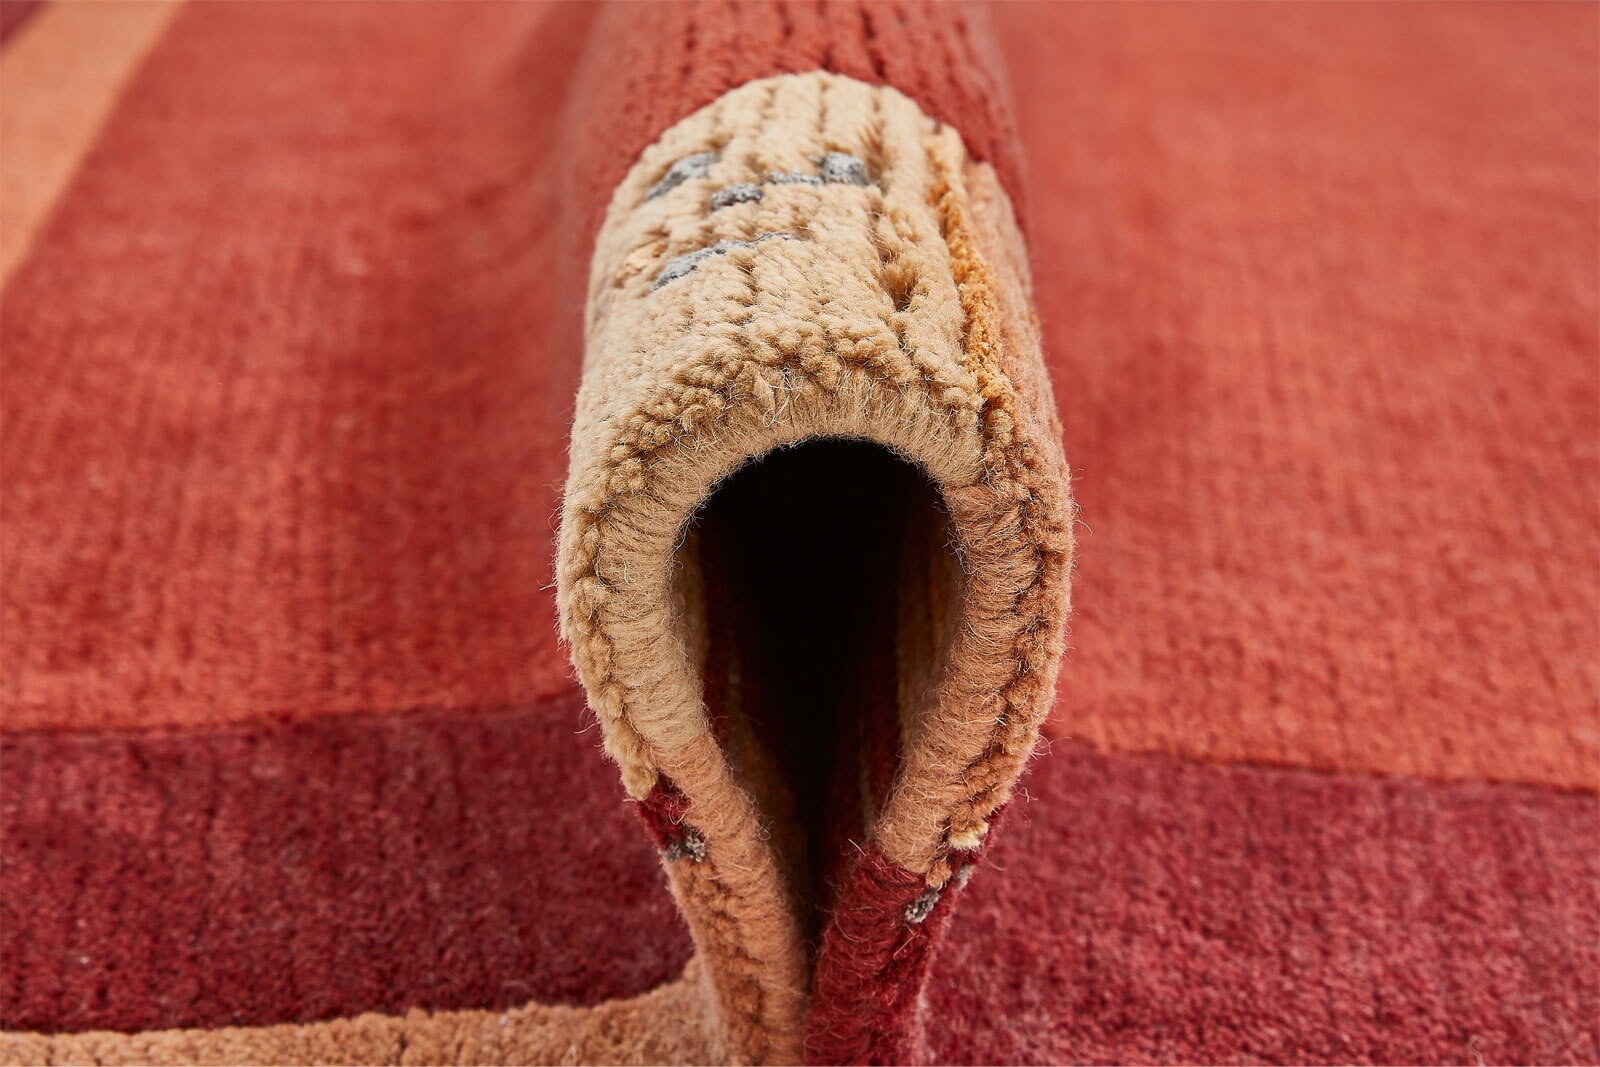 Teppich MANALI 80 x 200 cm rot